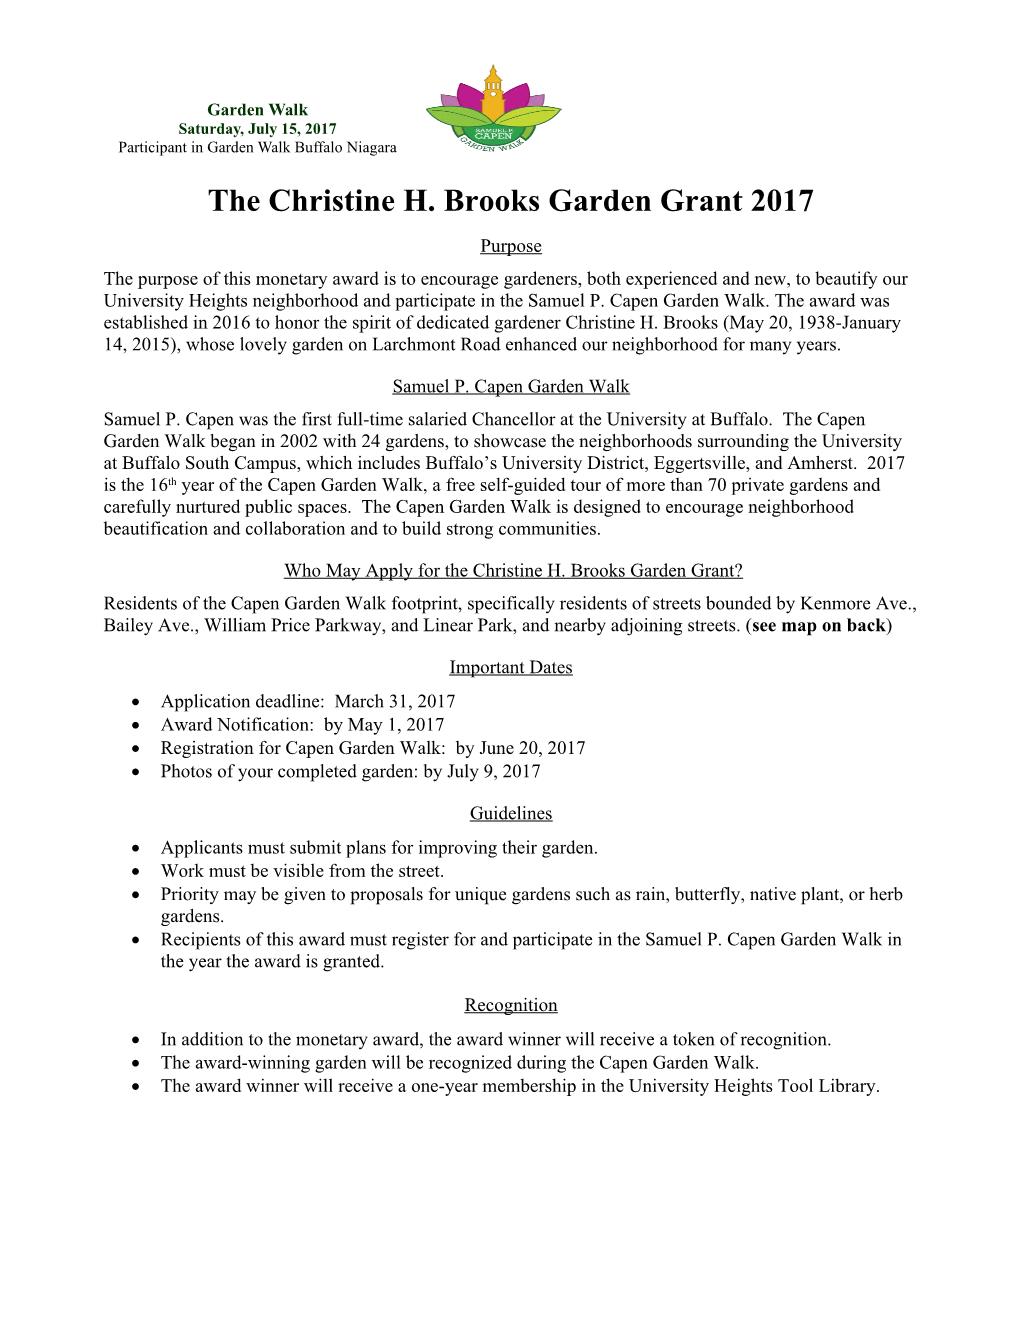 The Christine H. Brooks Garden Grant 2017